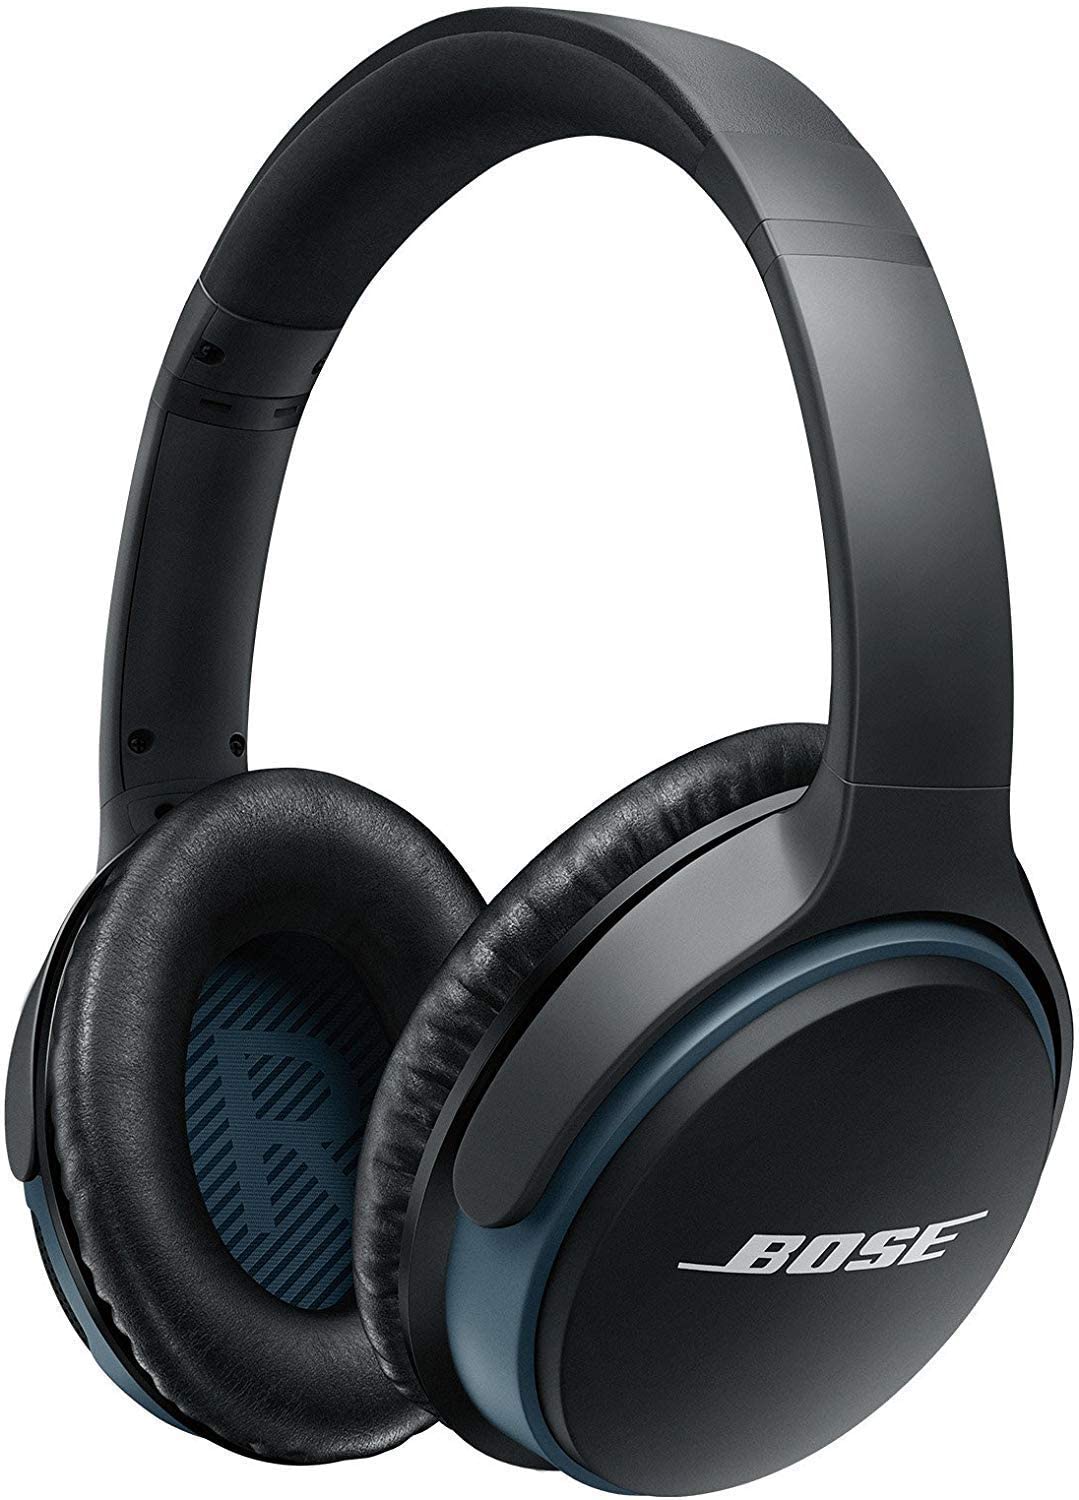 Bose SoundLink Wireless Around-Ear Headphones II - Black (New)